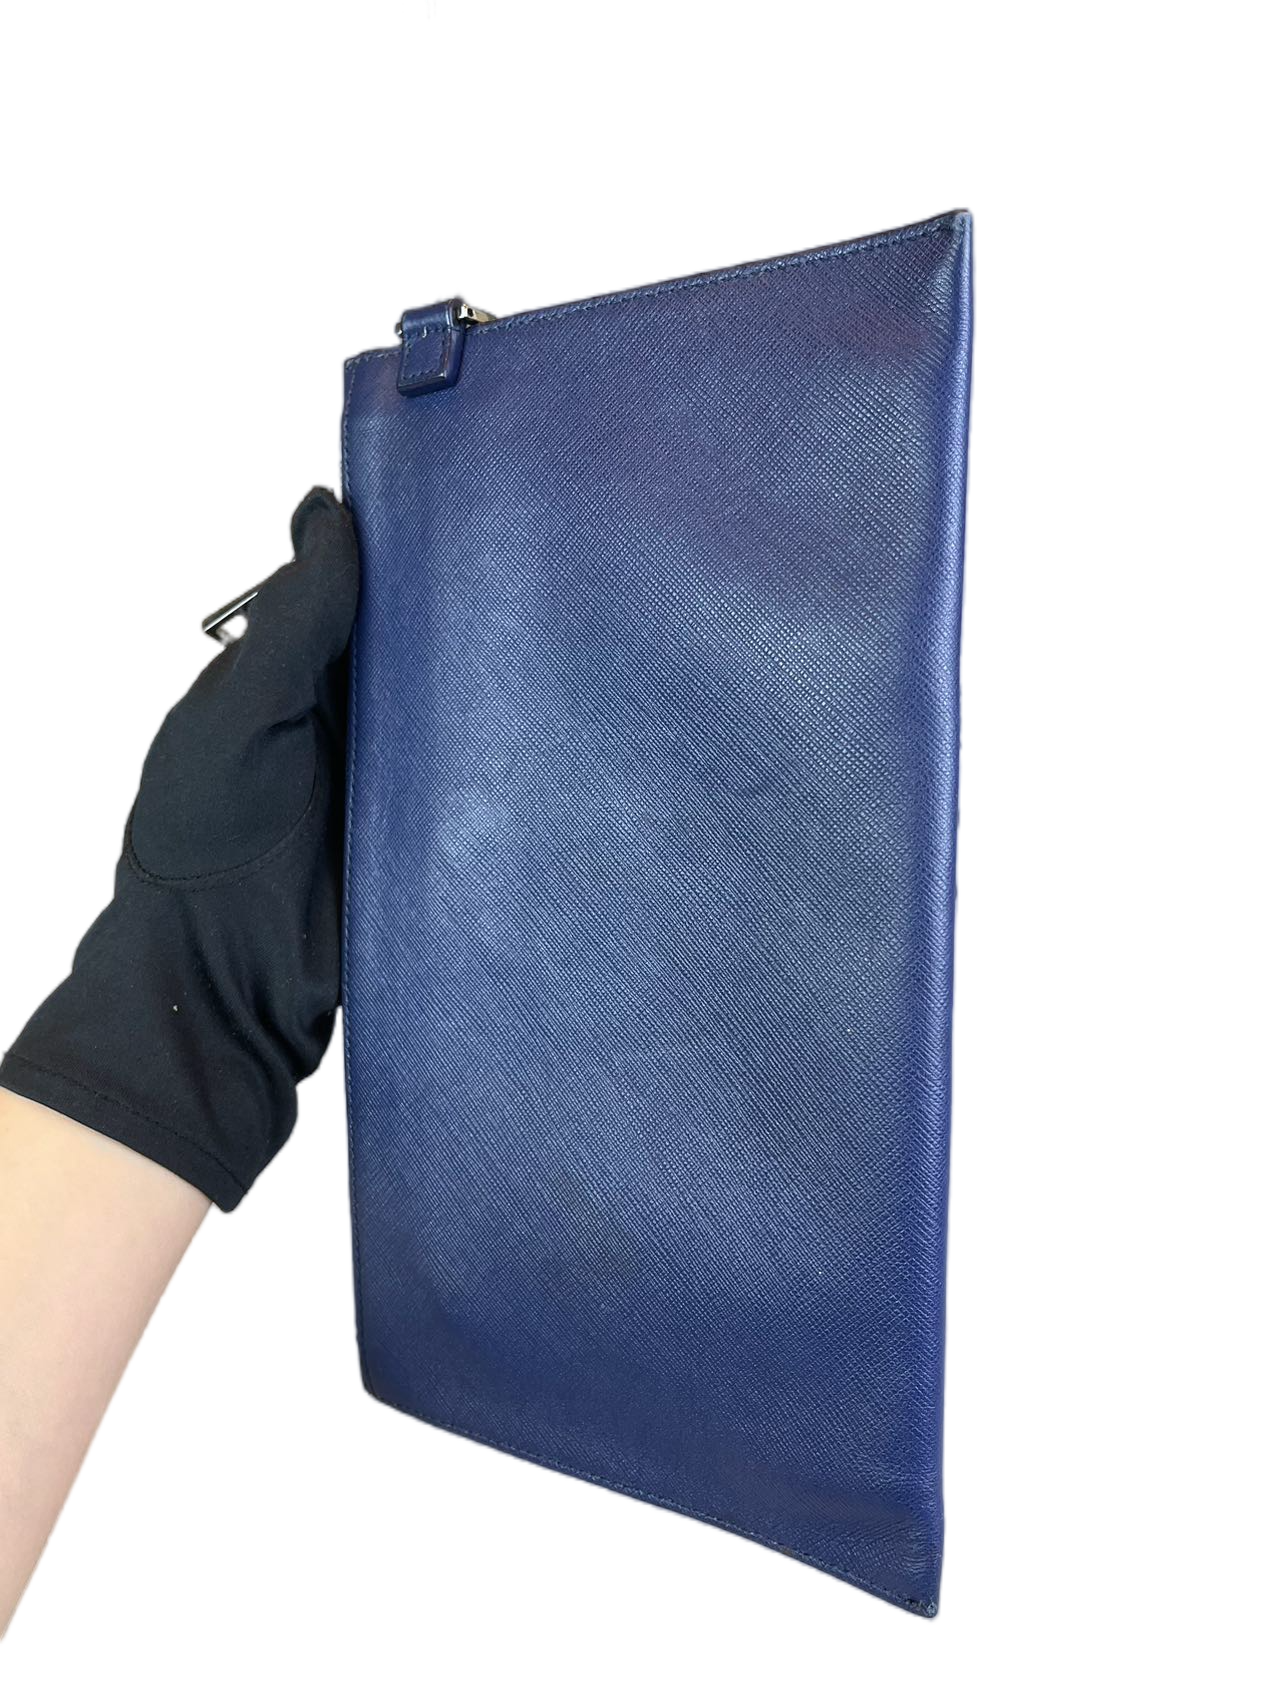 Versace Blue leather Clutches Handbag